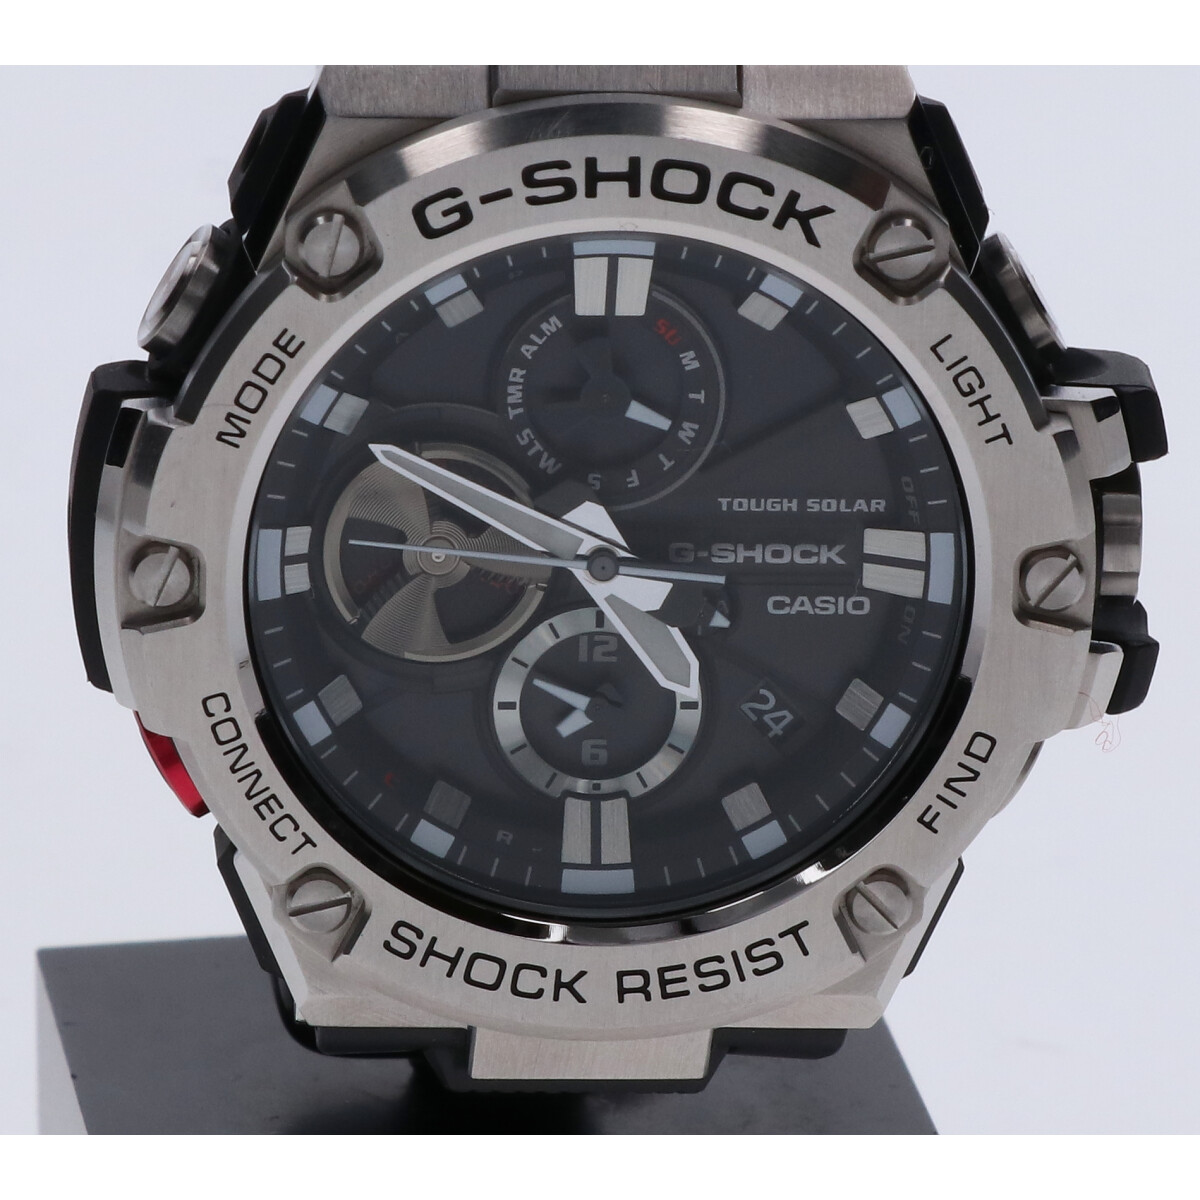 G-SHOCKのG-STEEL GST-B100-1AJF Bluetooth搭載タフネスクロノグラフ タフソーラー電波時計の買取実績です。